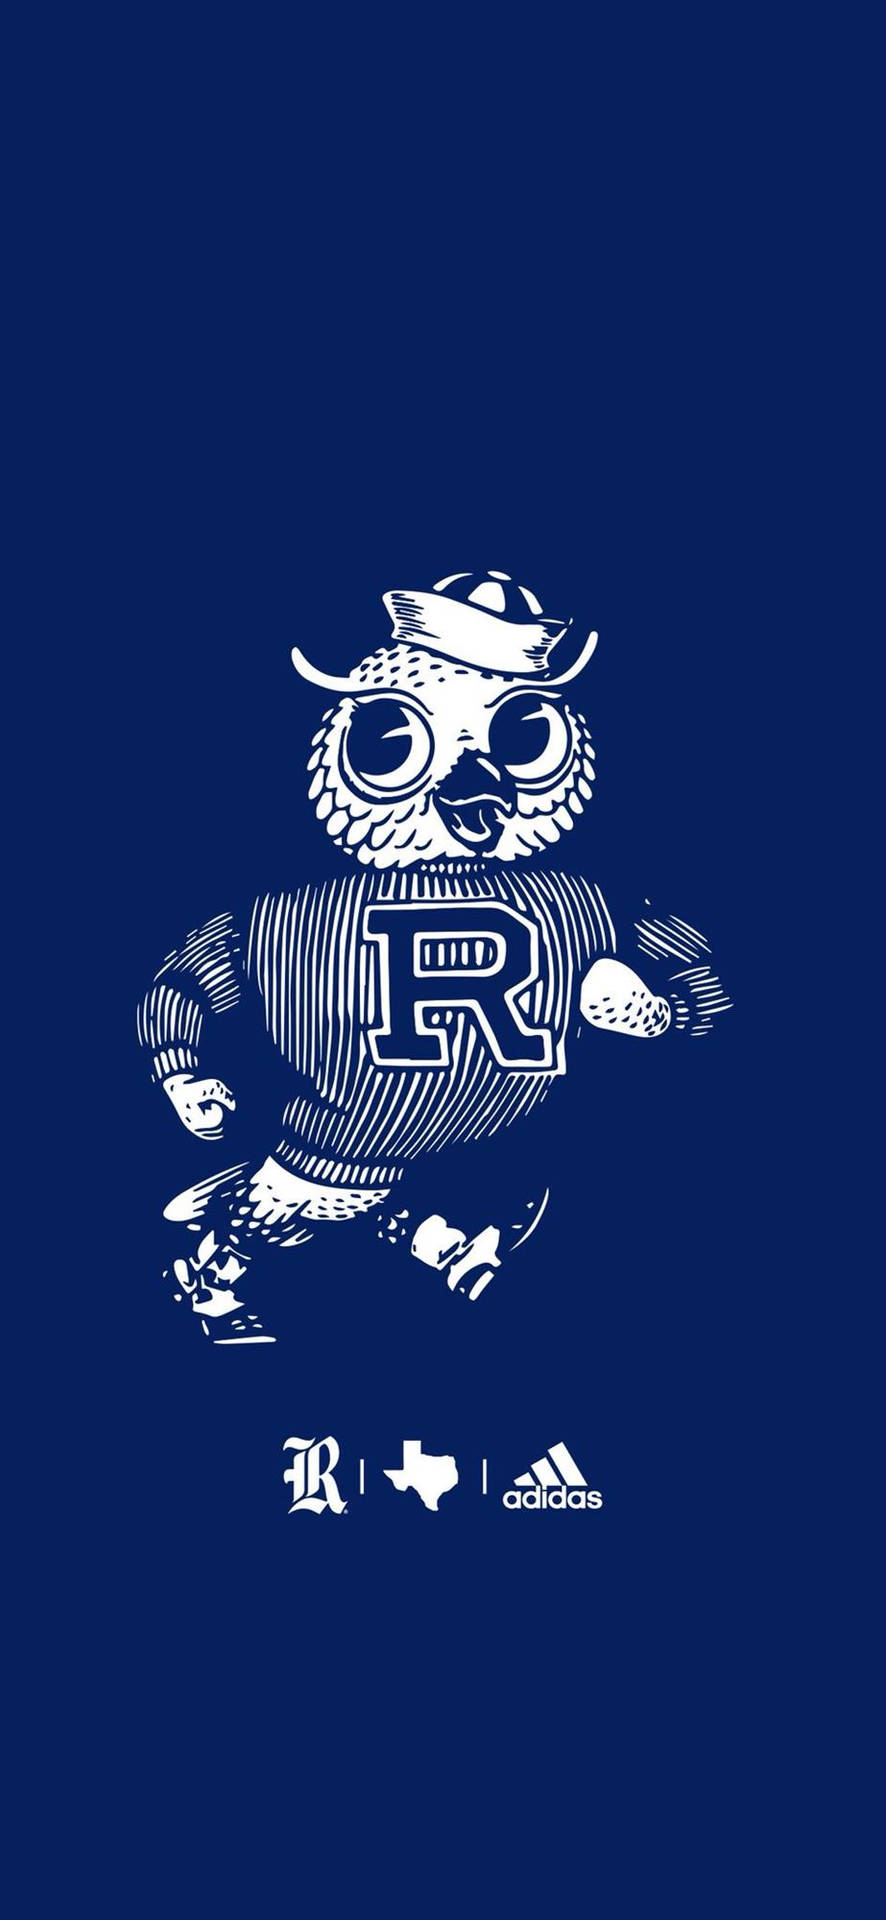 Riceuniversity Owl Mascot - Risuniversitetets Ugglemaskot Wallpaper